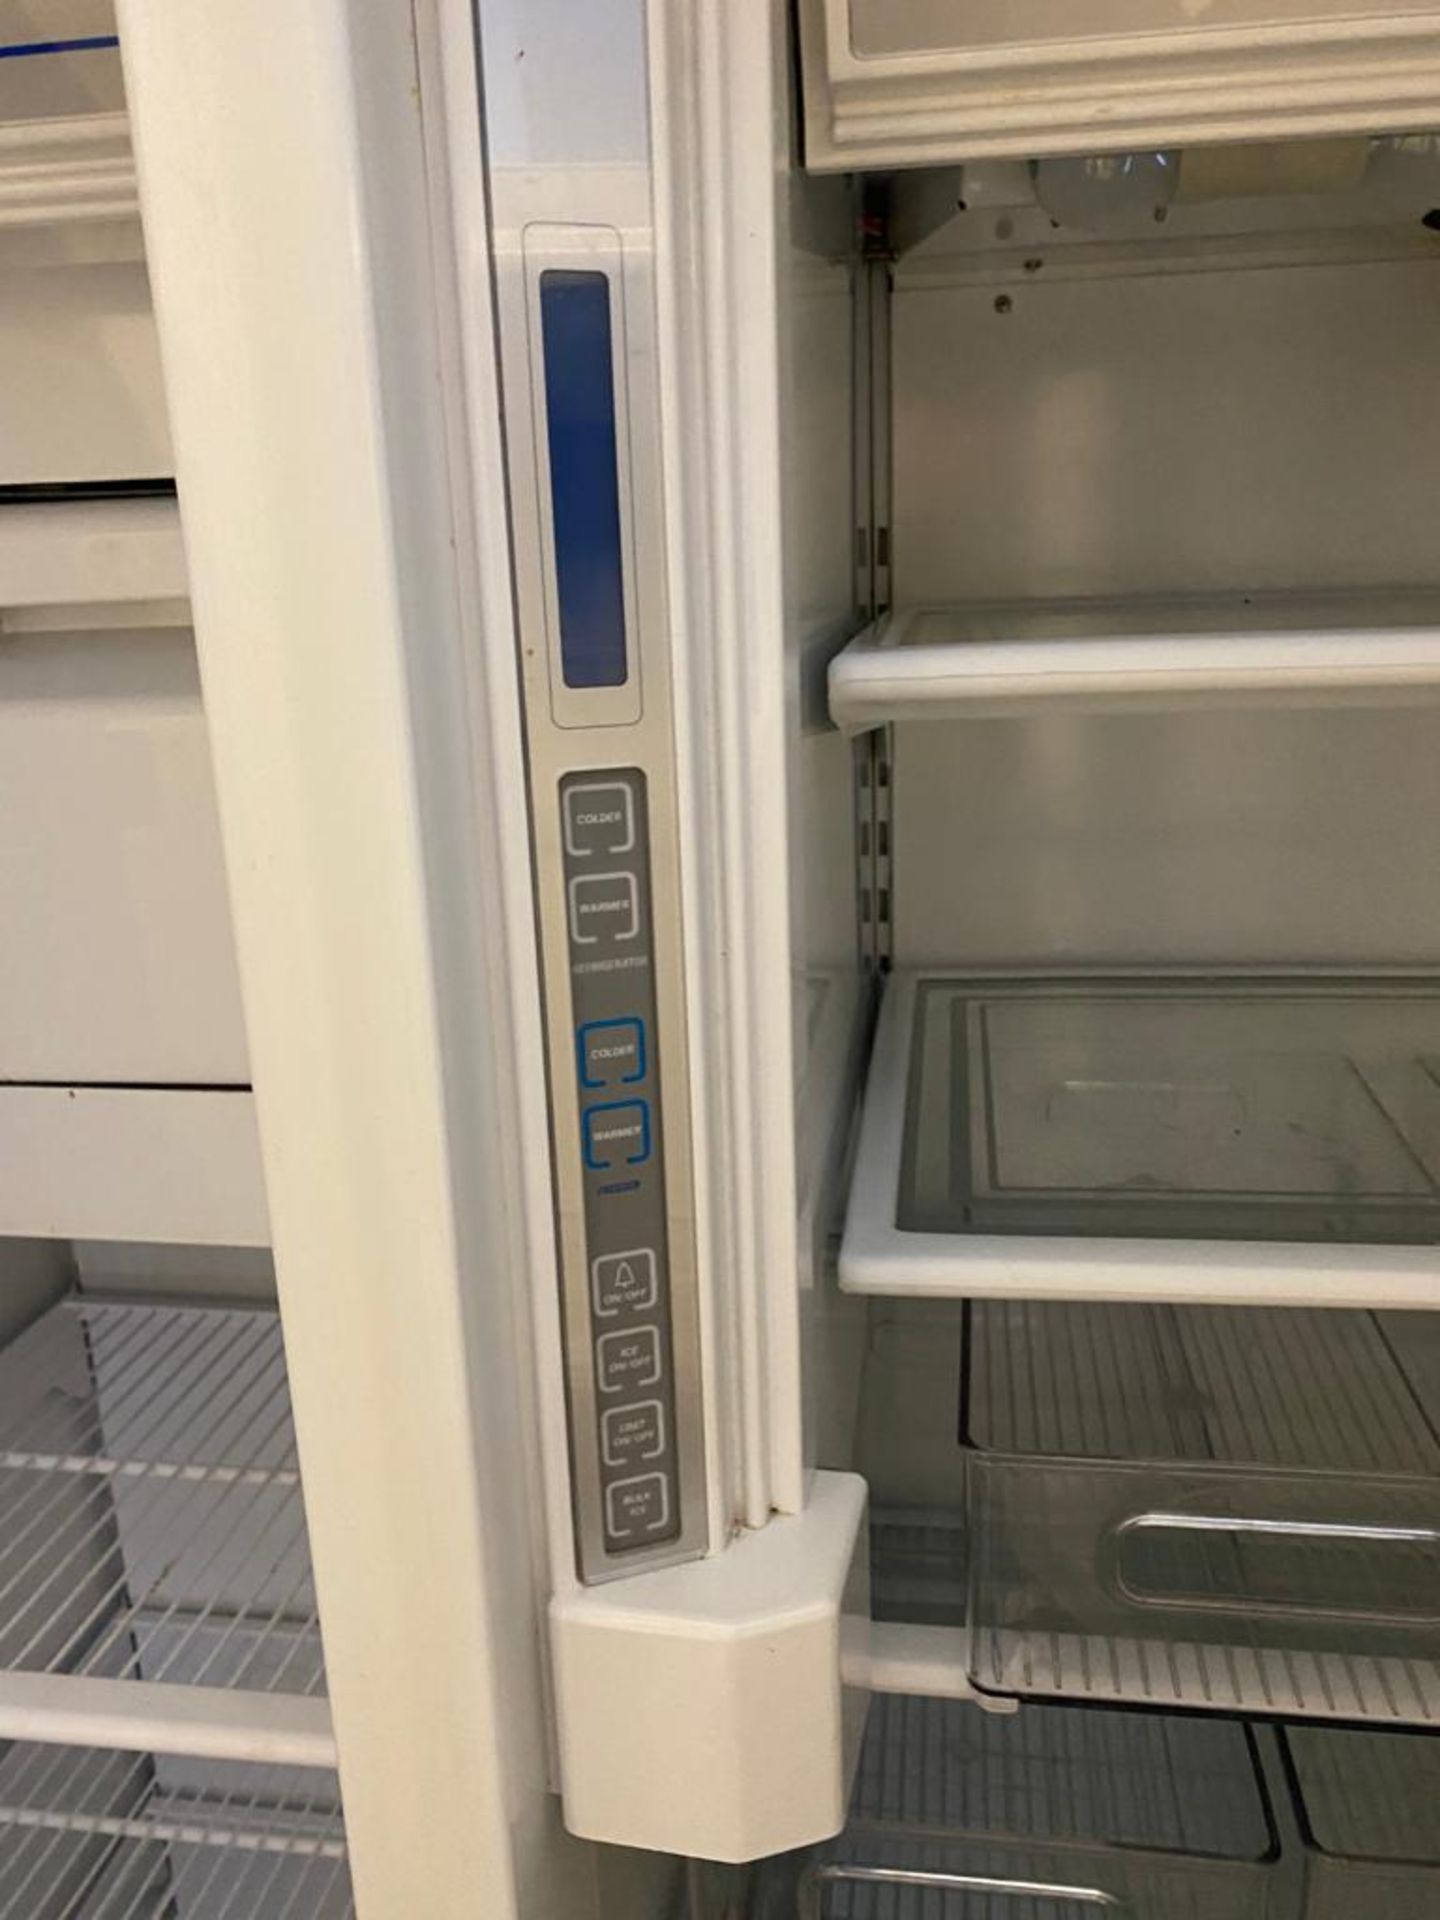 1 x Subzero 695 American Style Fridge Freezer With Ice and Water Dispenser - Image 4 of 4